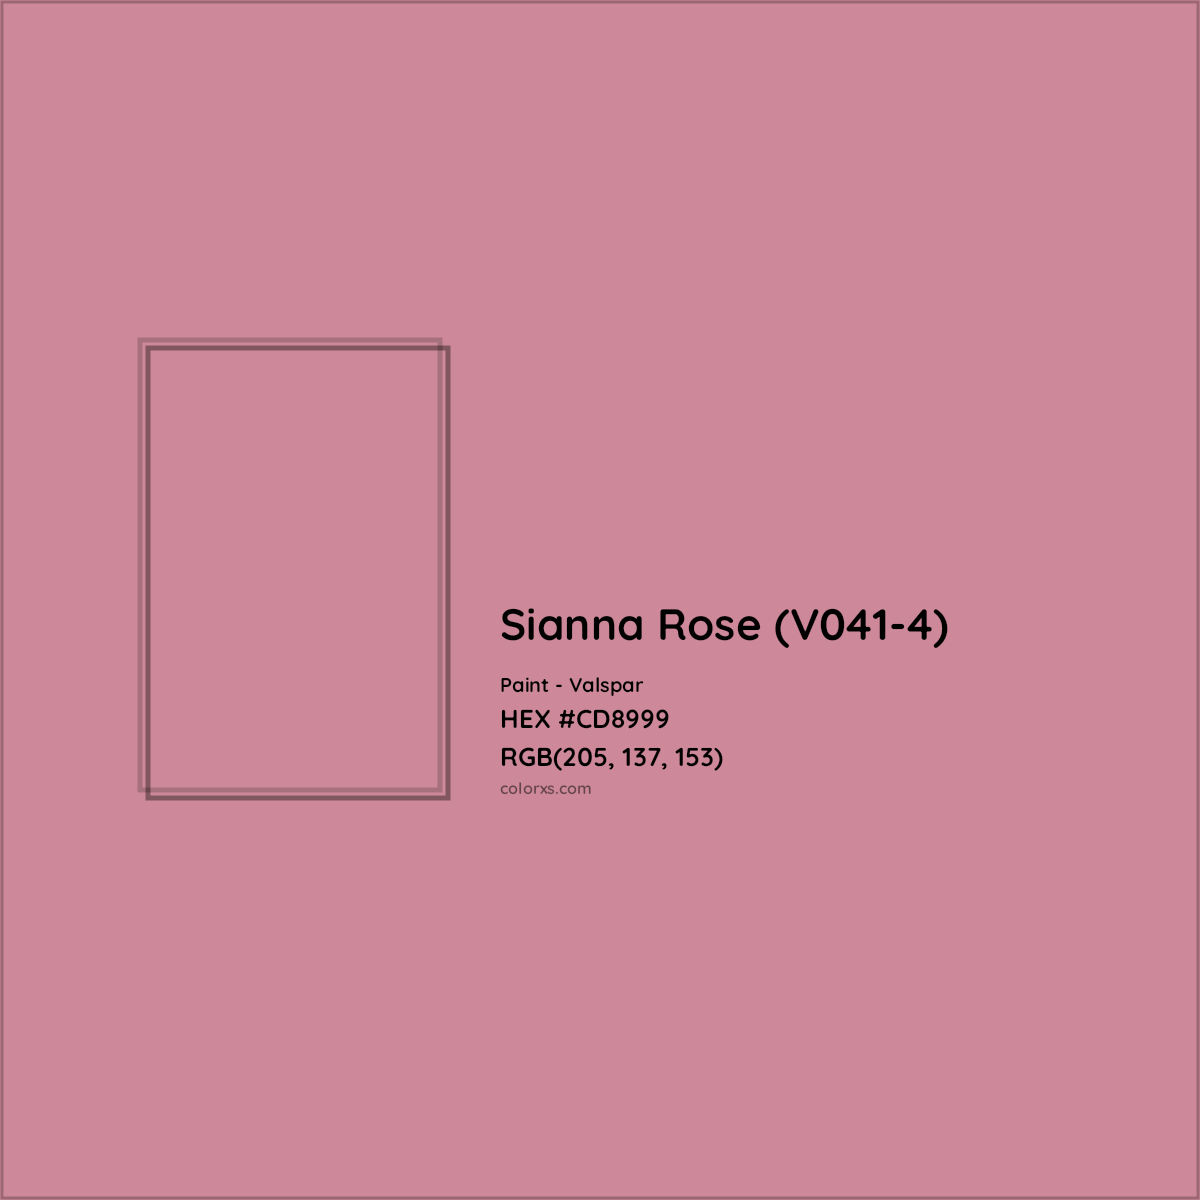 HEX #CD8999 Sianna Rose (V041-4) Paint Valspar - Color Code